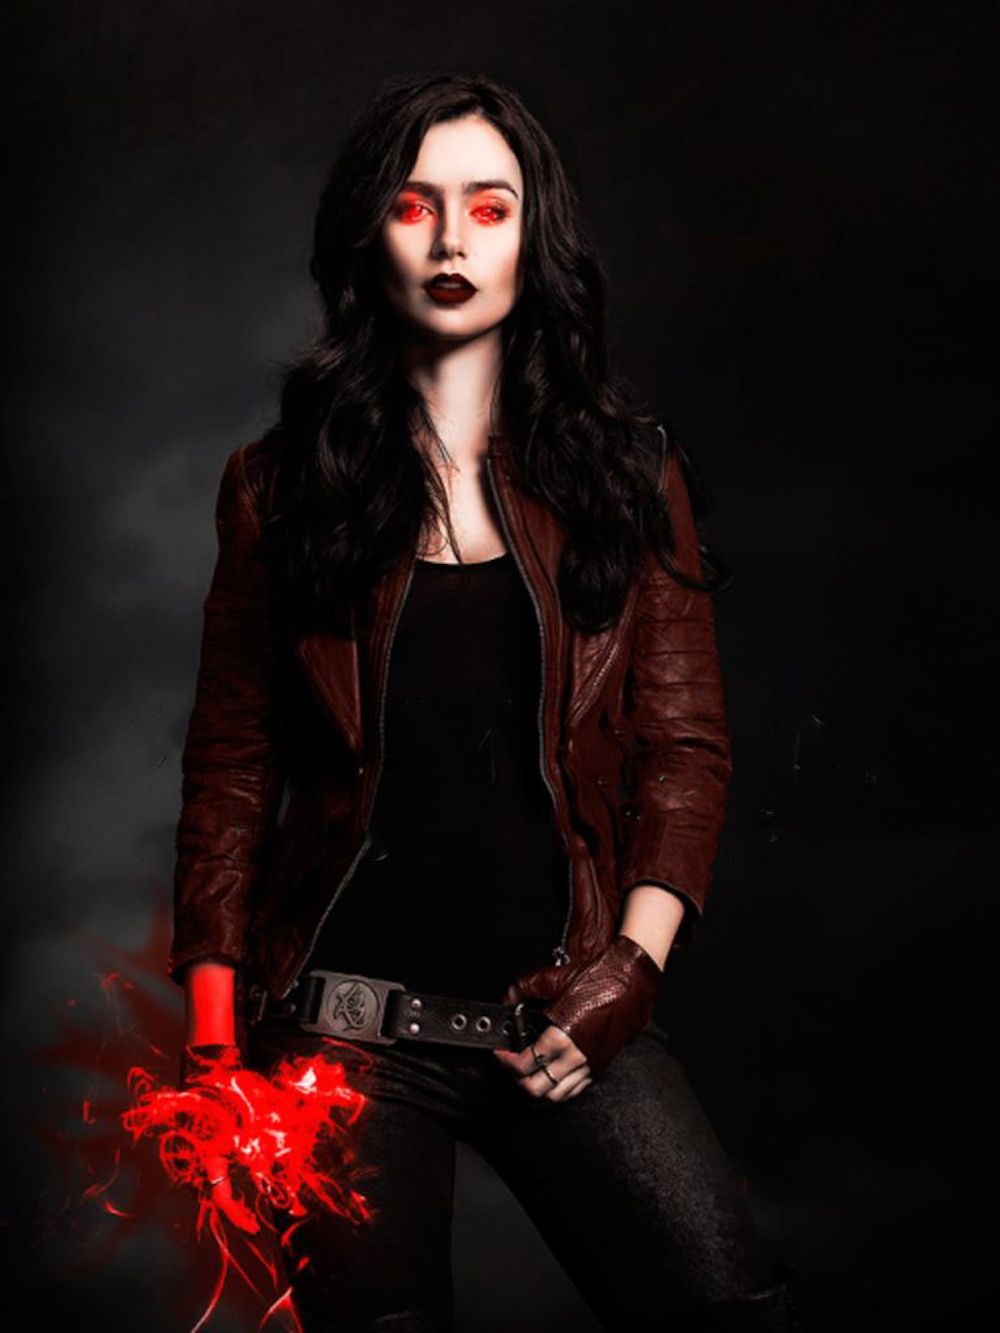 Scarlet Witch Marvel